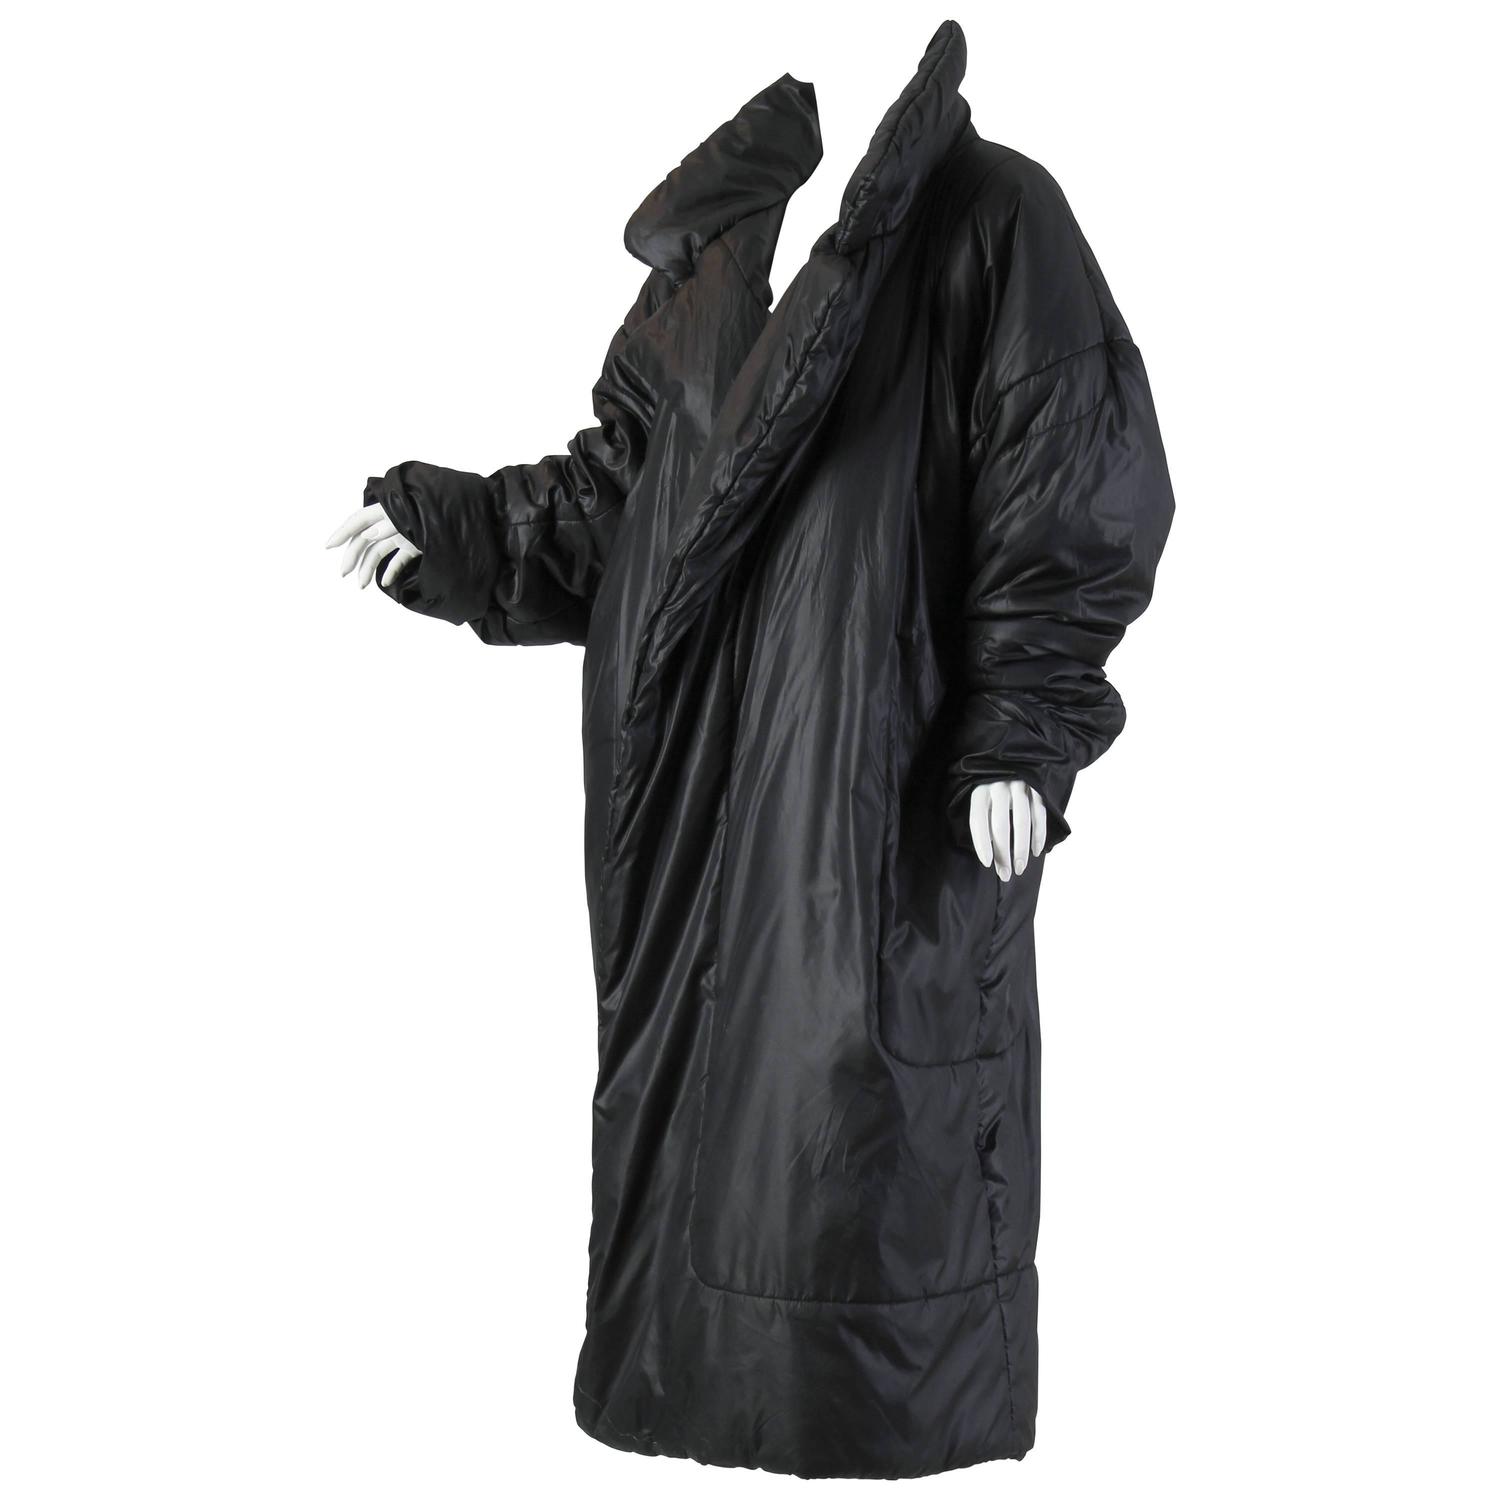 Iconic Norma Kamali Sleeping Bag Coat For Sale at 1stdibs